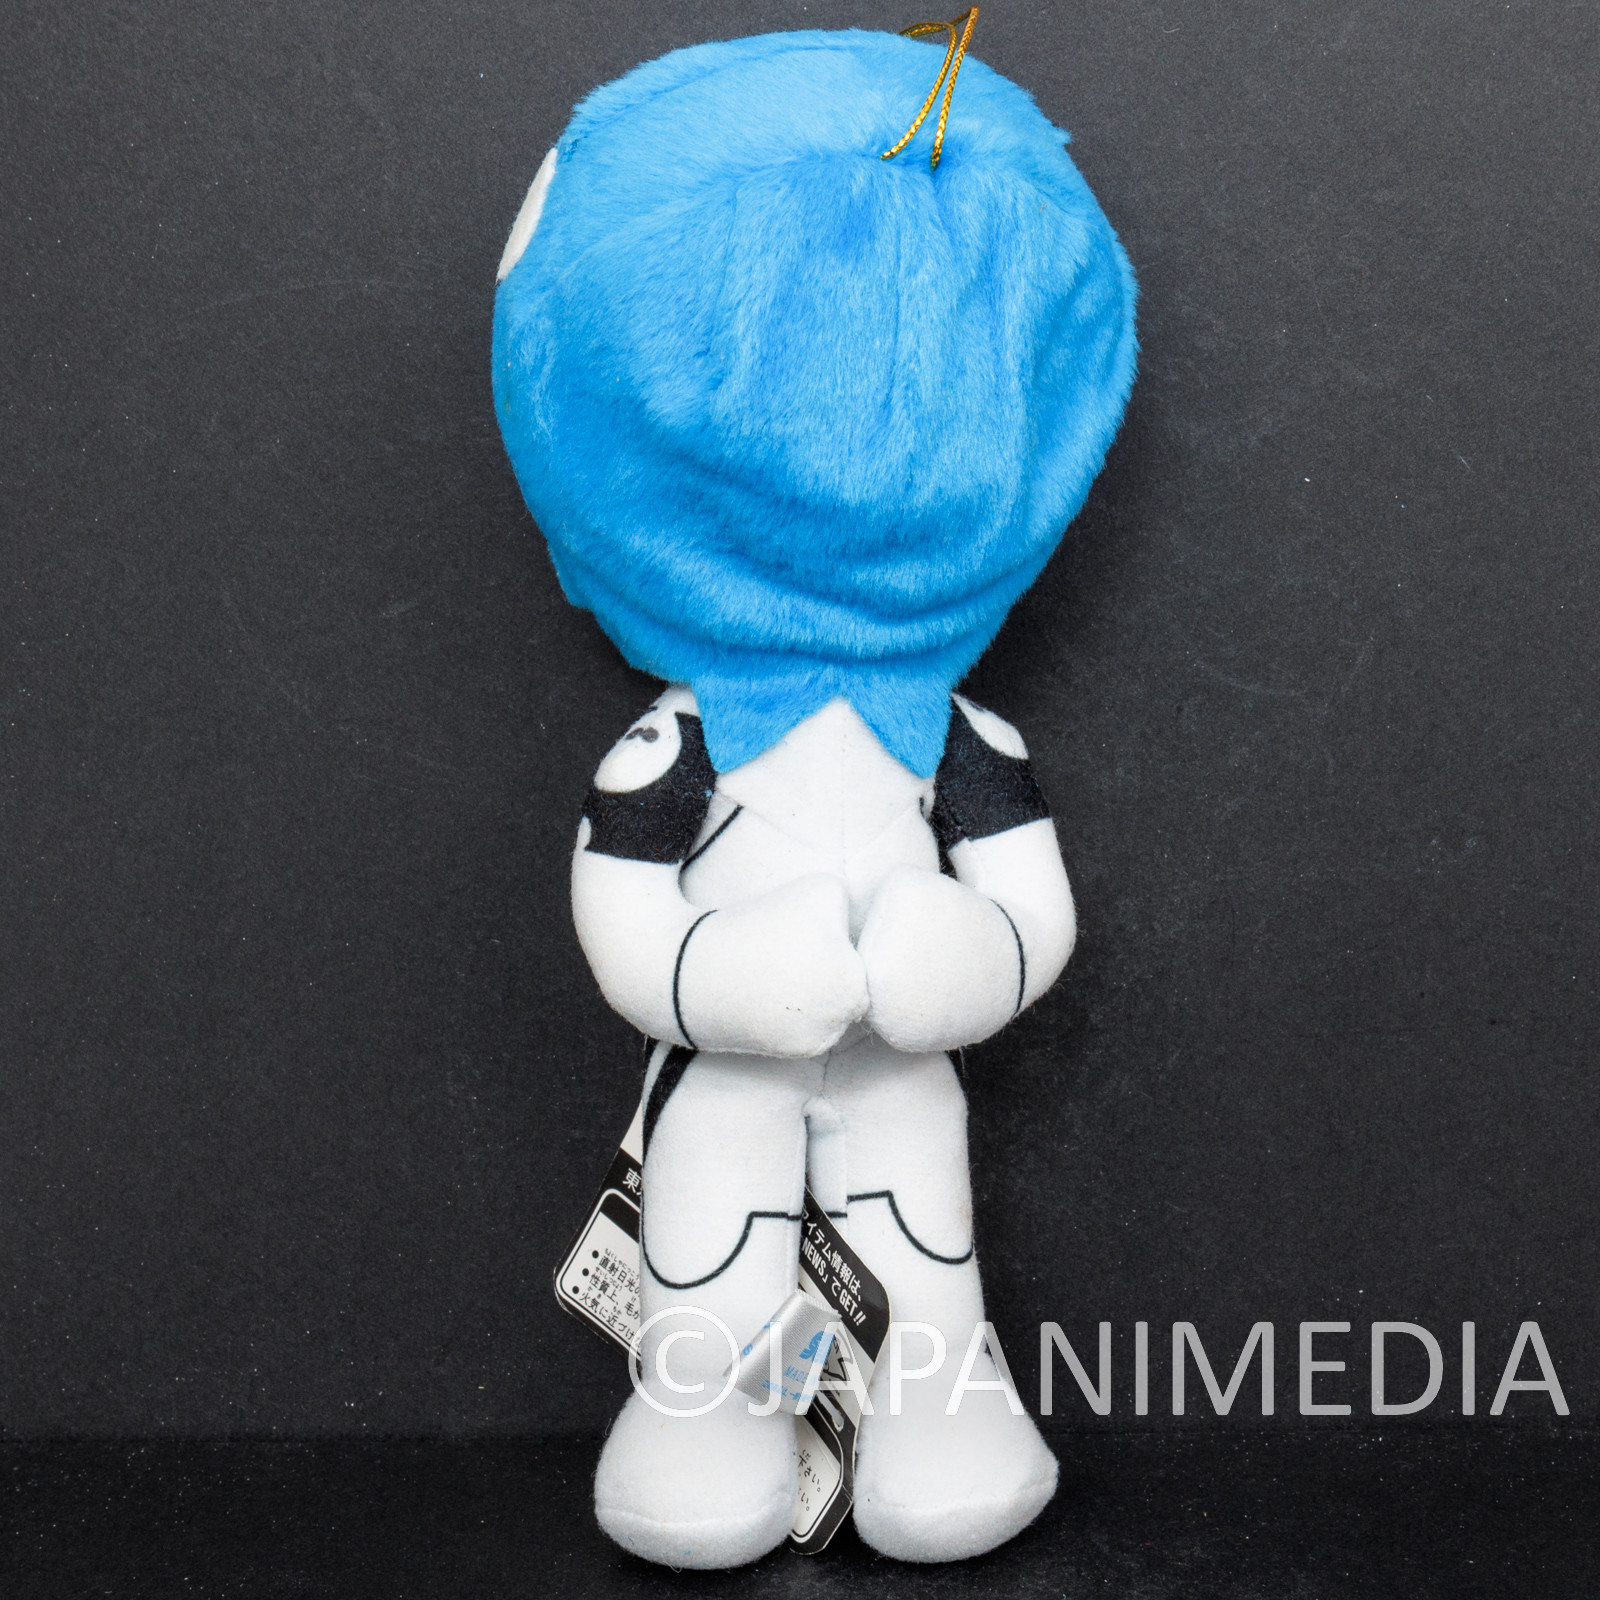 Evangelion Rei Ayanami Plug Suit Plush Doll Figure SEGA 1995 JAPAN ANIME